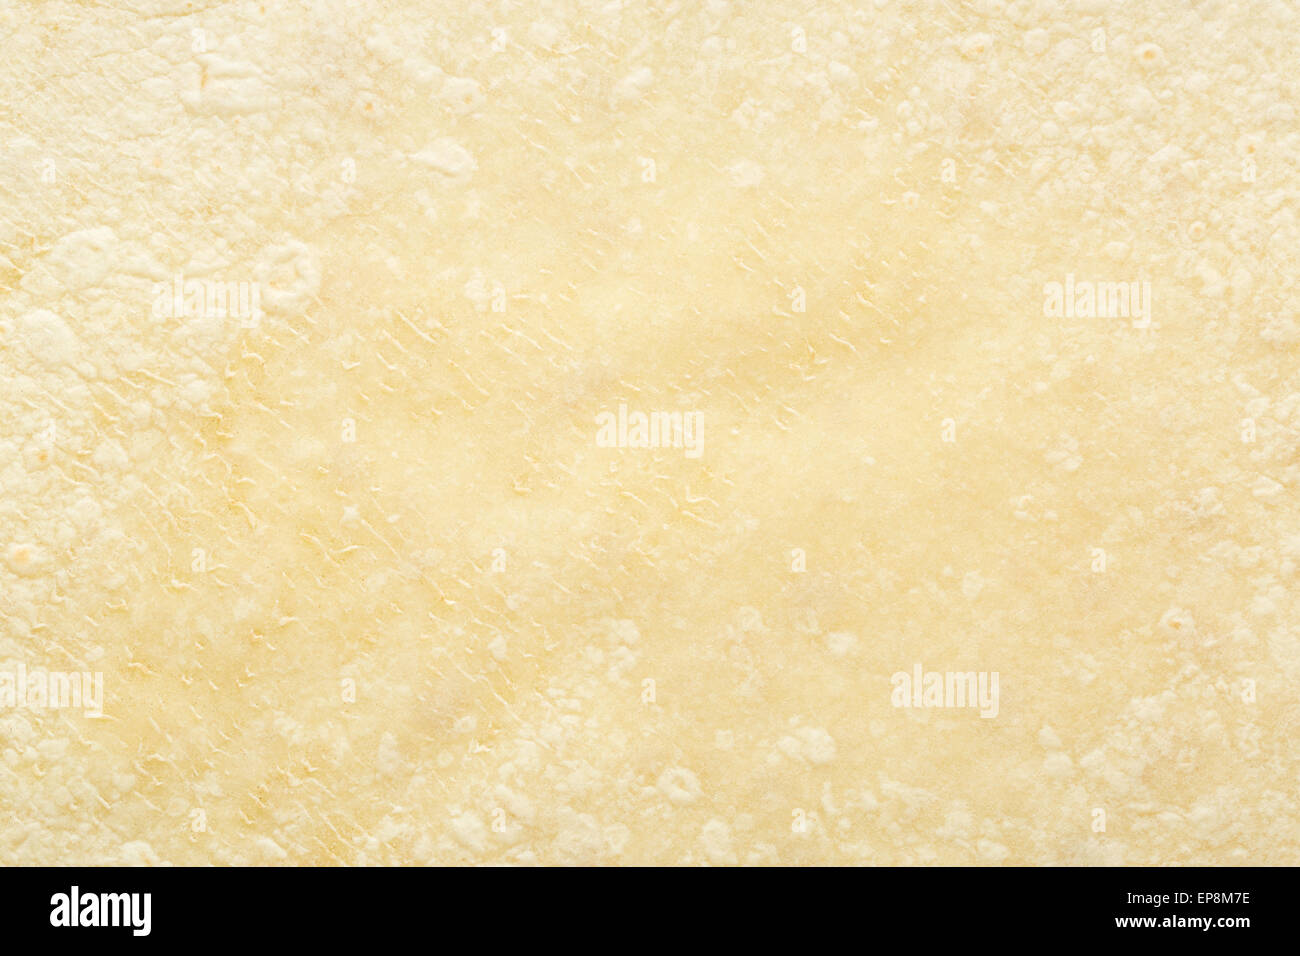 Tortilla bread texture background Stock Photo